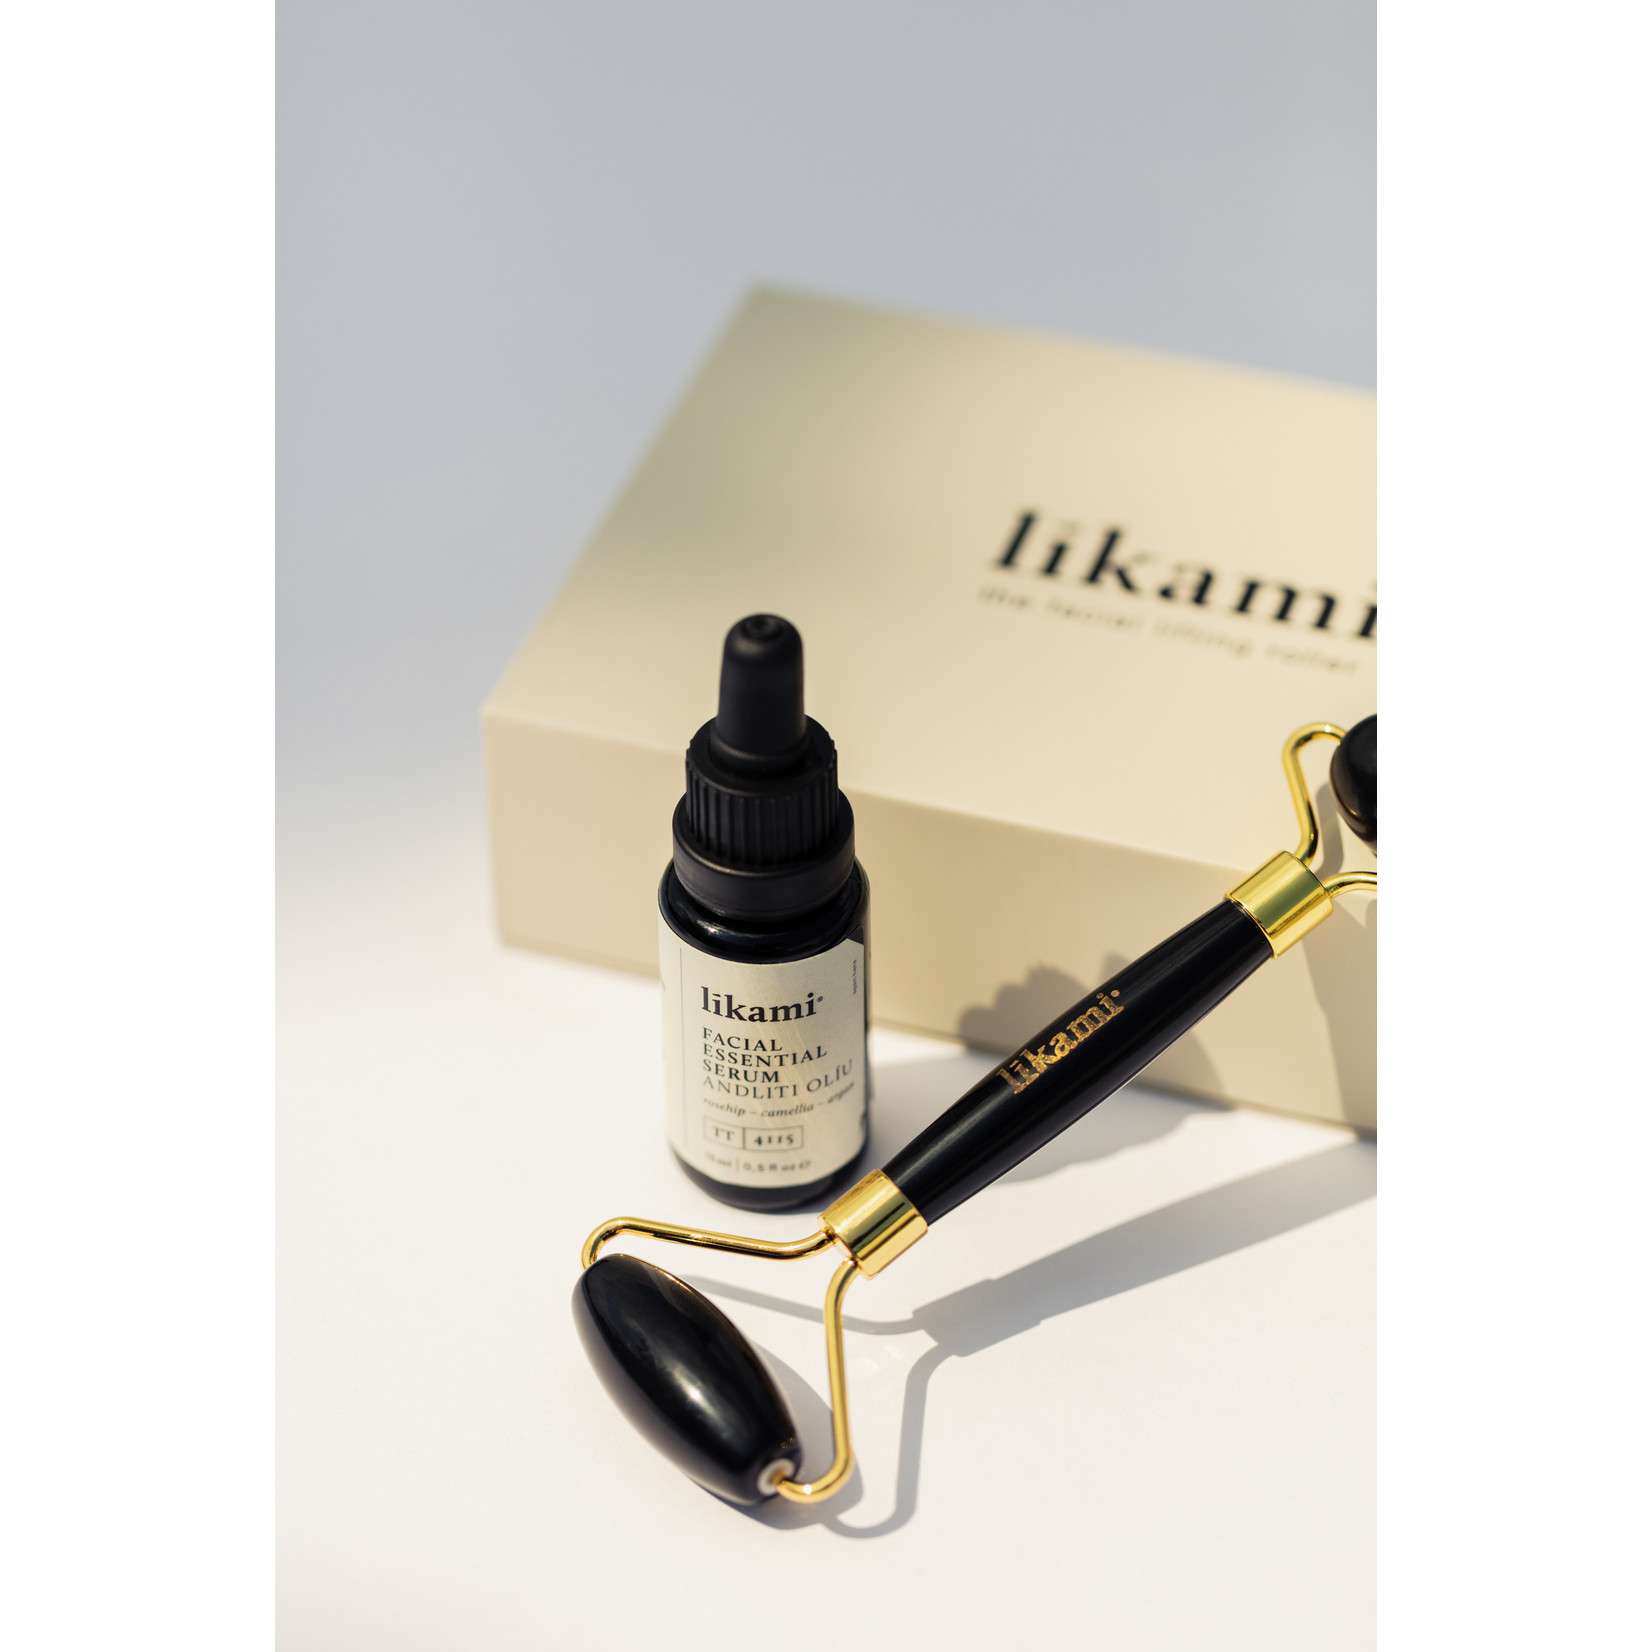 Lìkami Set Facial Essential Serum & Lifting Roller